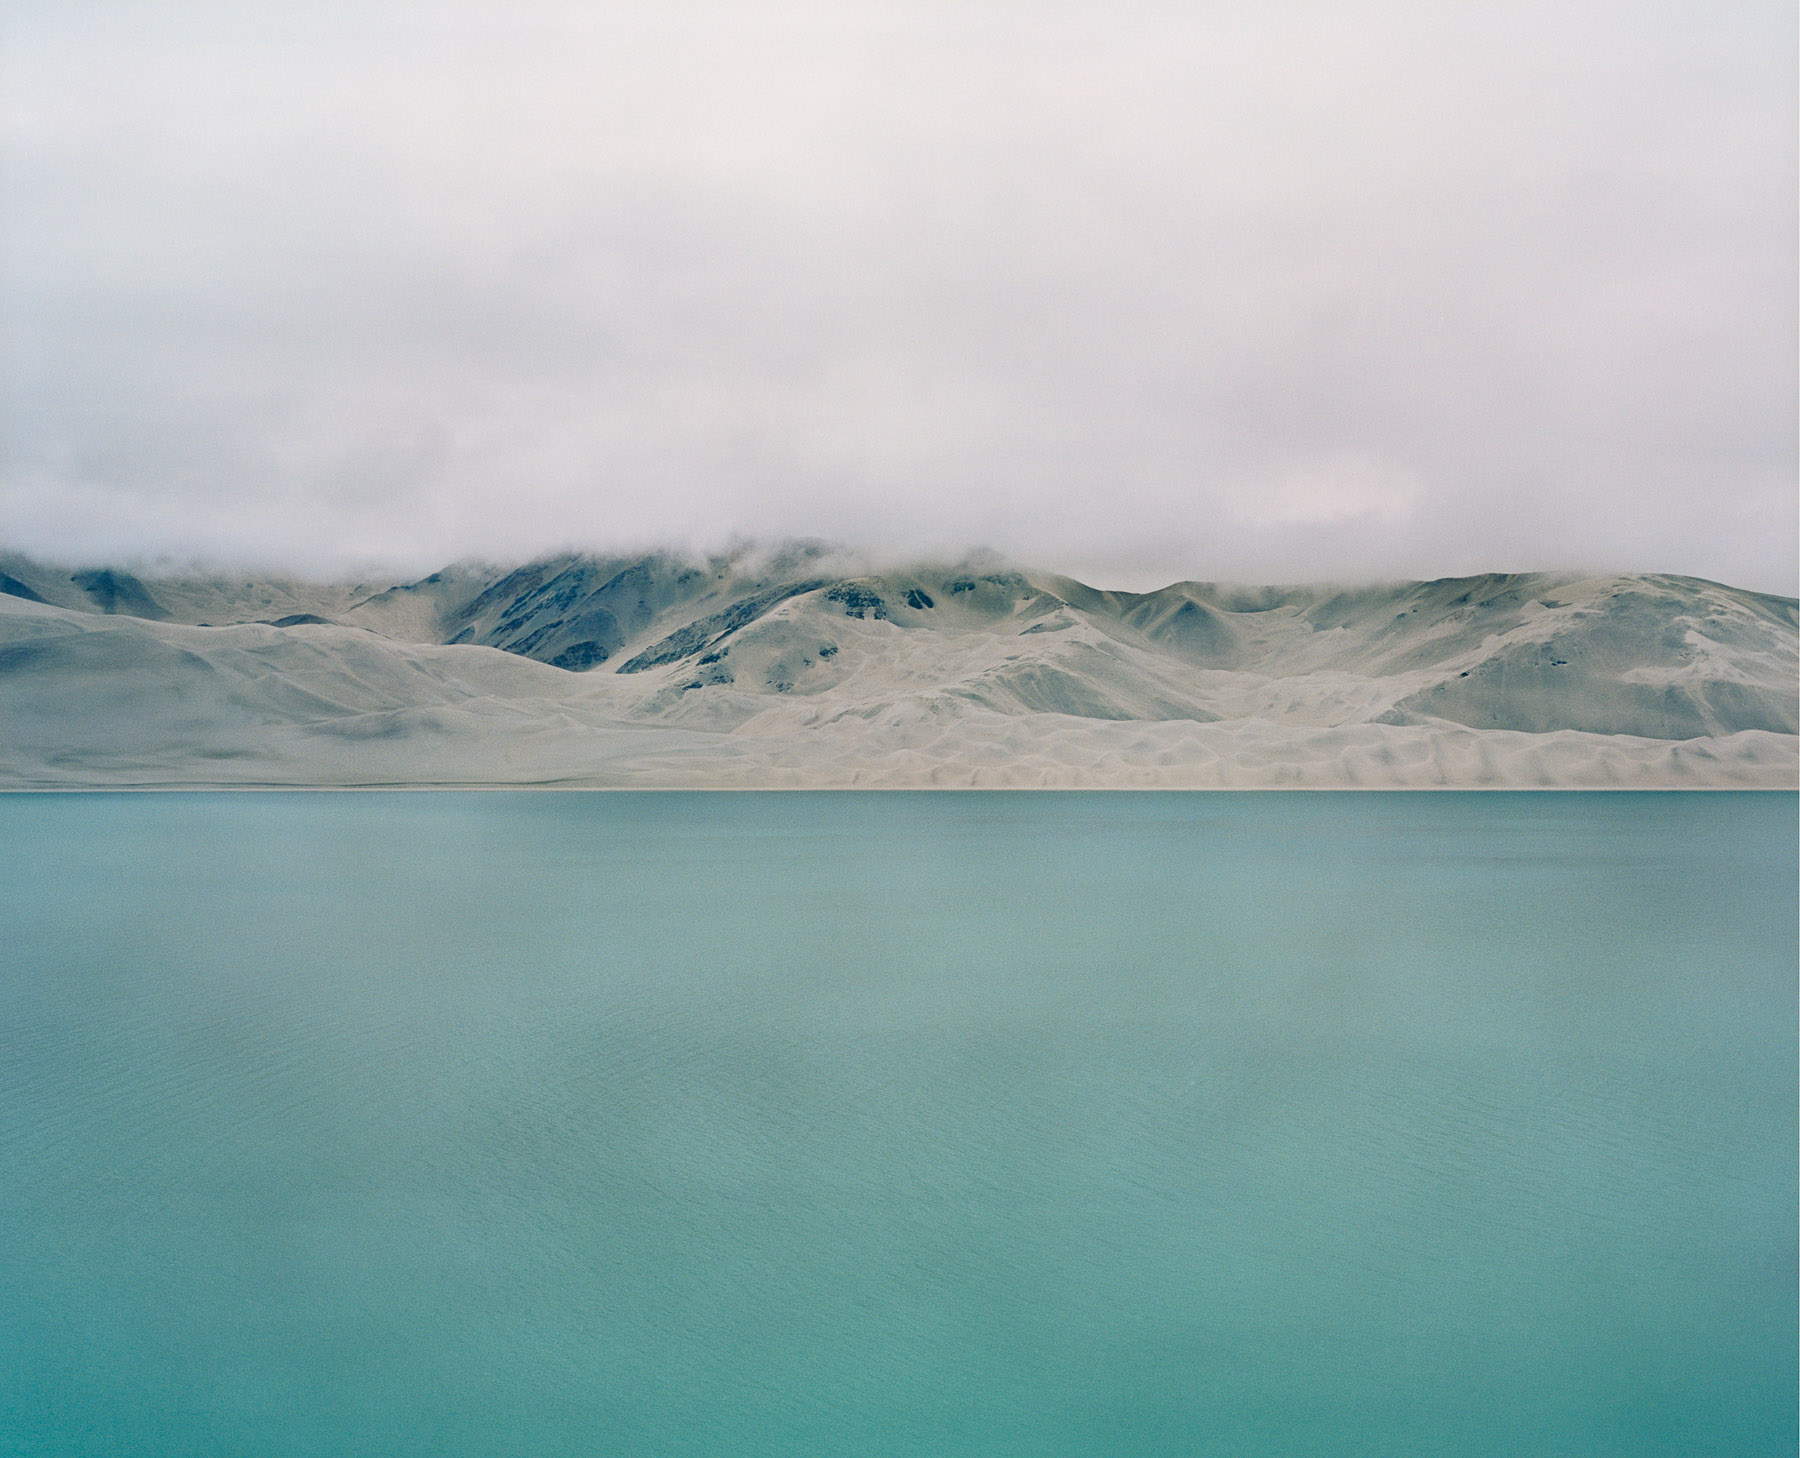  May 2016. Xinjiang province, China. View of Baishahu lake on the itinarary of the Karakoram highway, the road linking the western Chinese province of Xinjiang with Pakistan.  